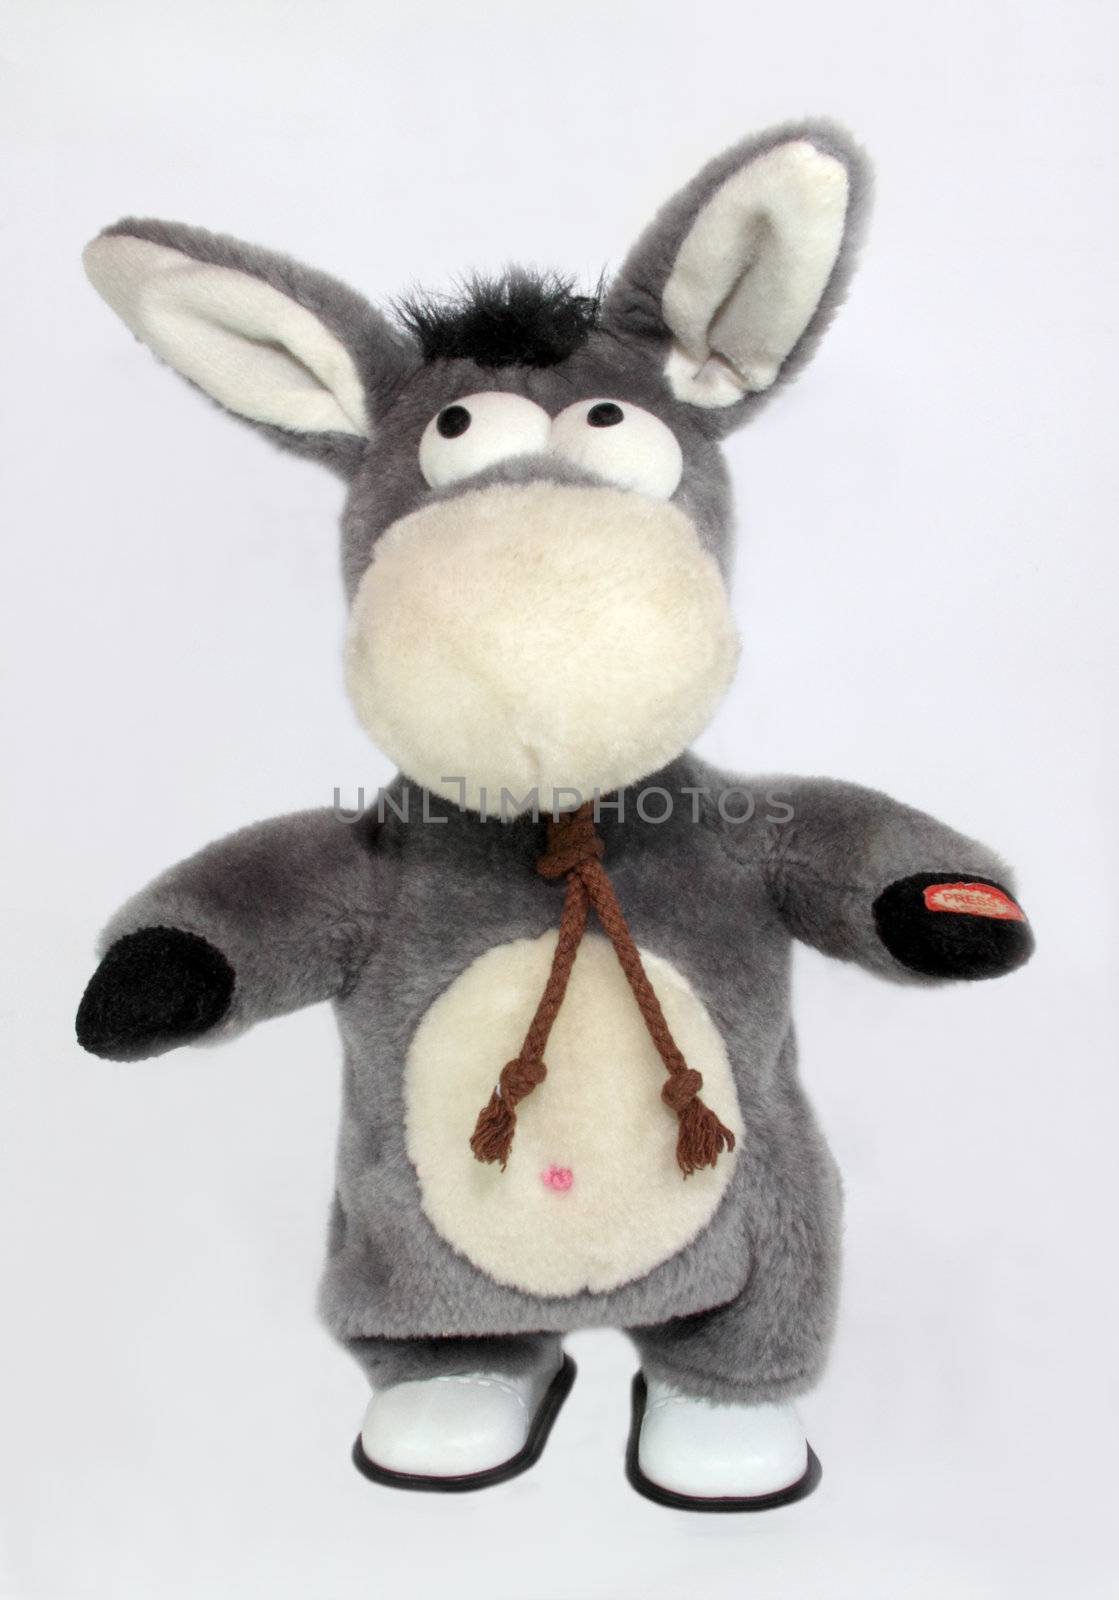 Soft children's toy - burro